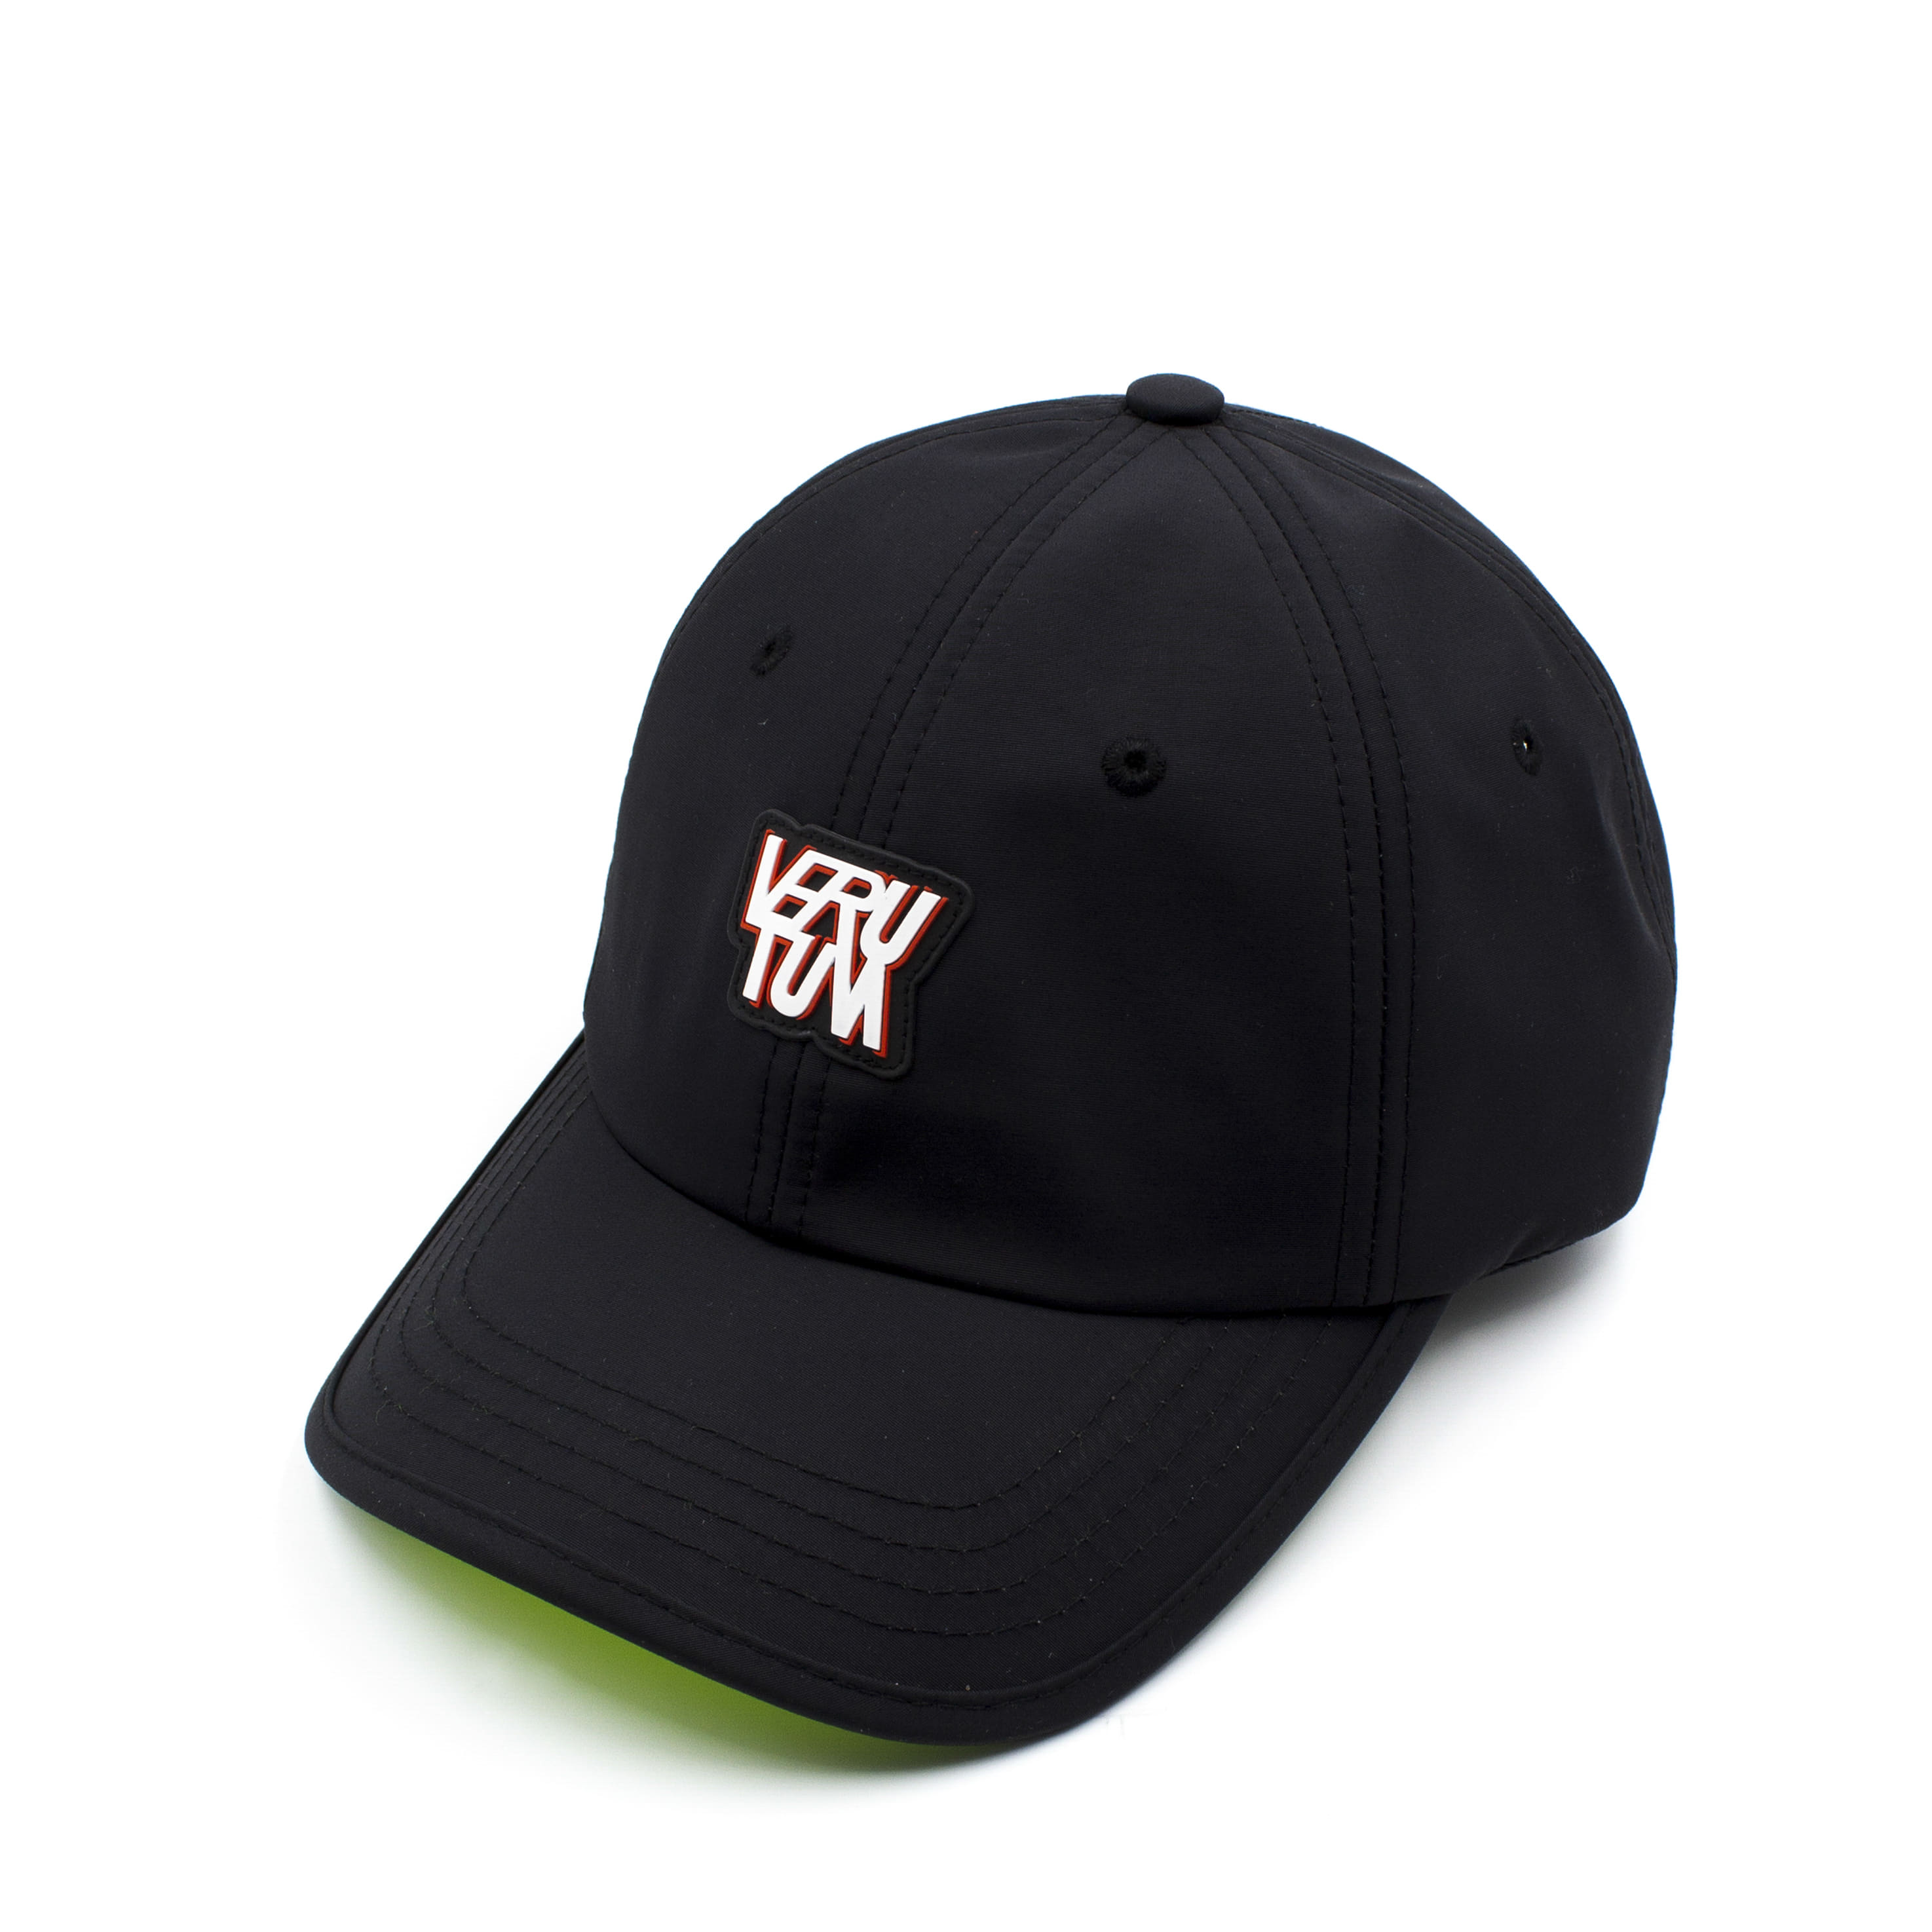 HW-VSH004 : Black│VERUTUM Sports Cap